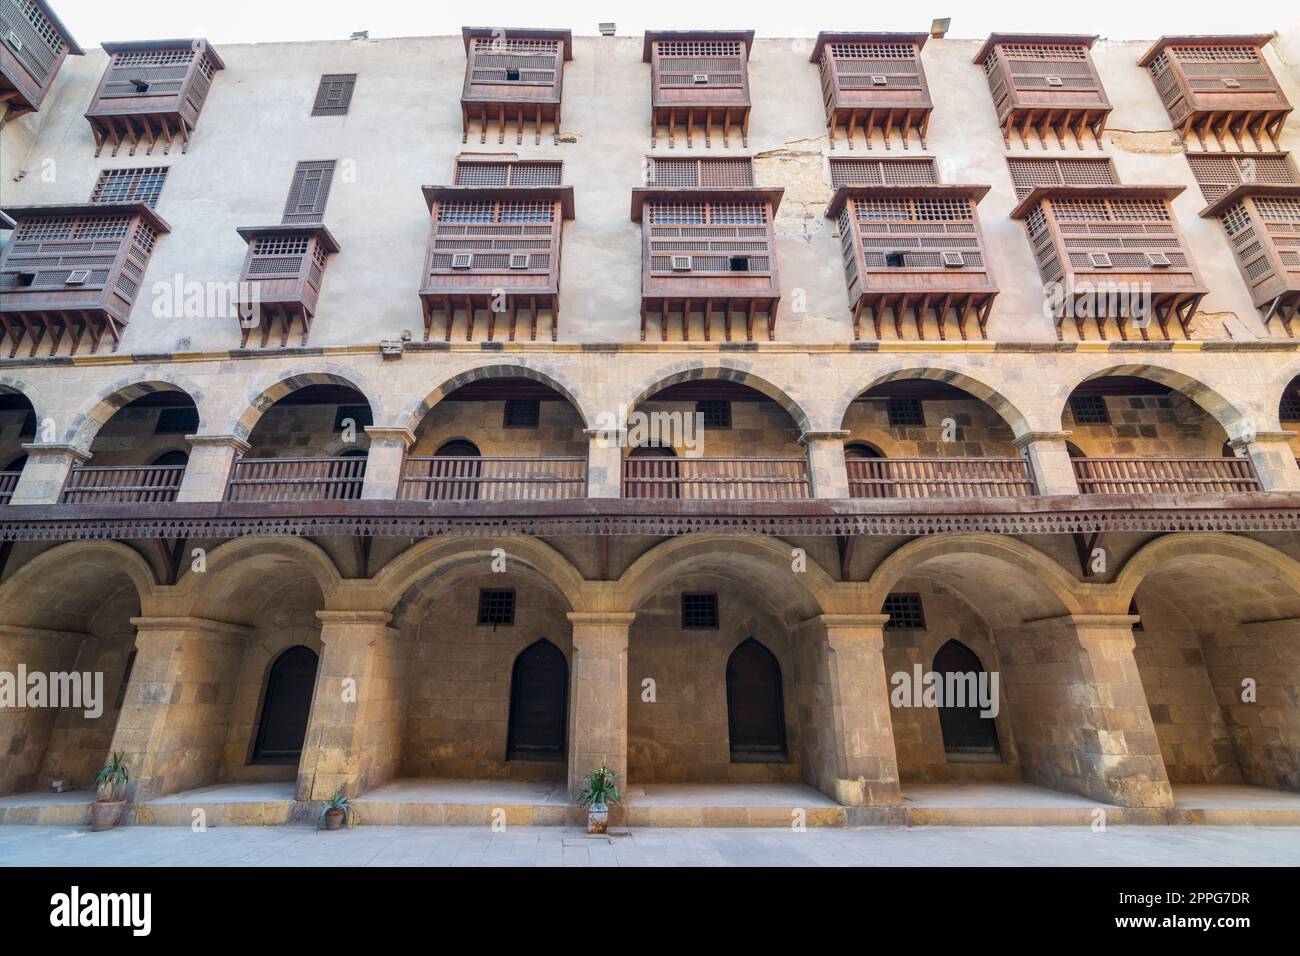 Facade of caravansary of Bazaraa, with vaulted arcades and wooden oriel windows, Cairo, Egypt Stock Photo